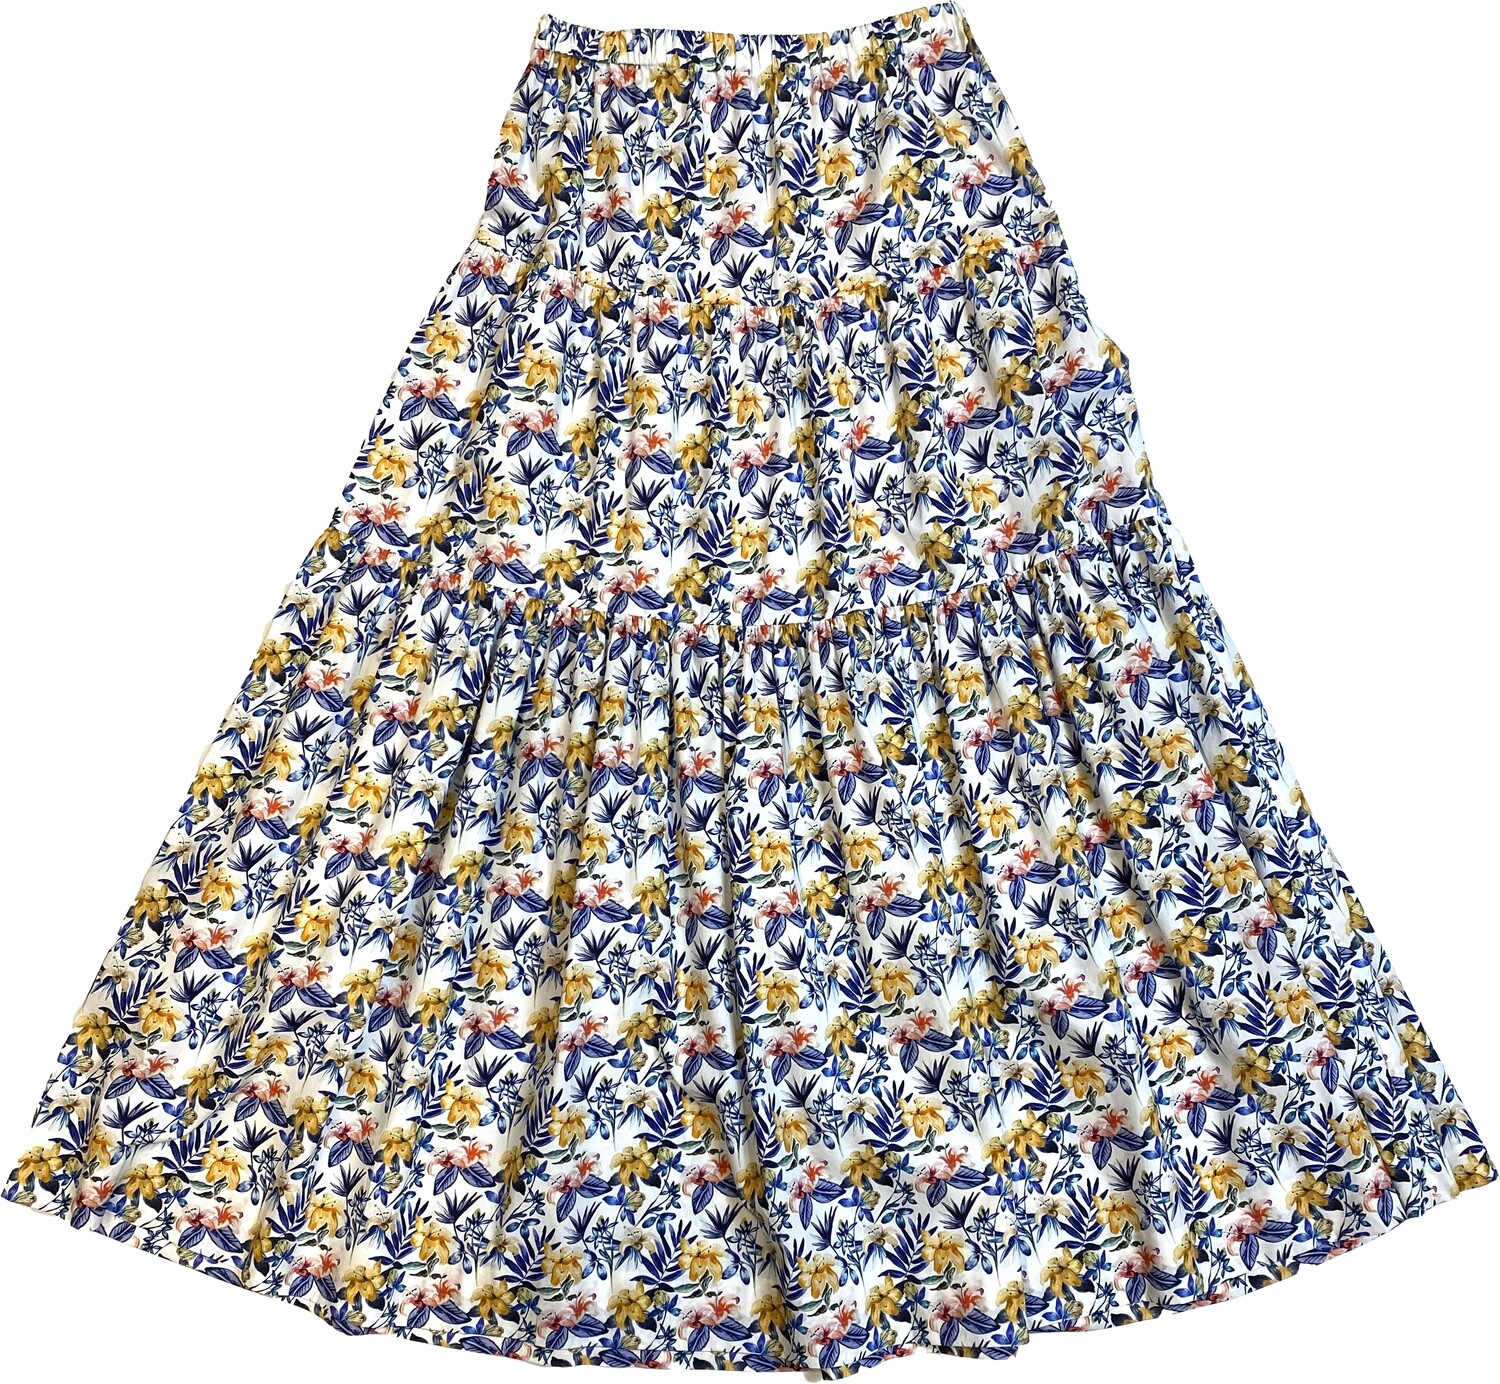 Limited Edition Skirt 100% Cotton Fiorellinibcoblugiallo GONNA